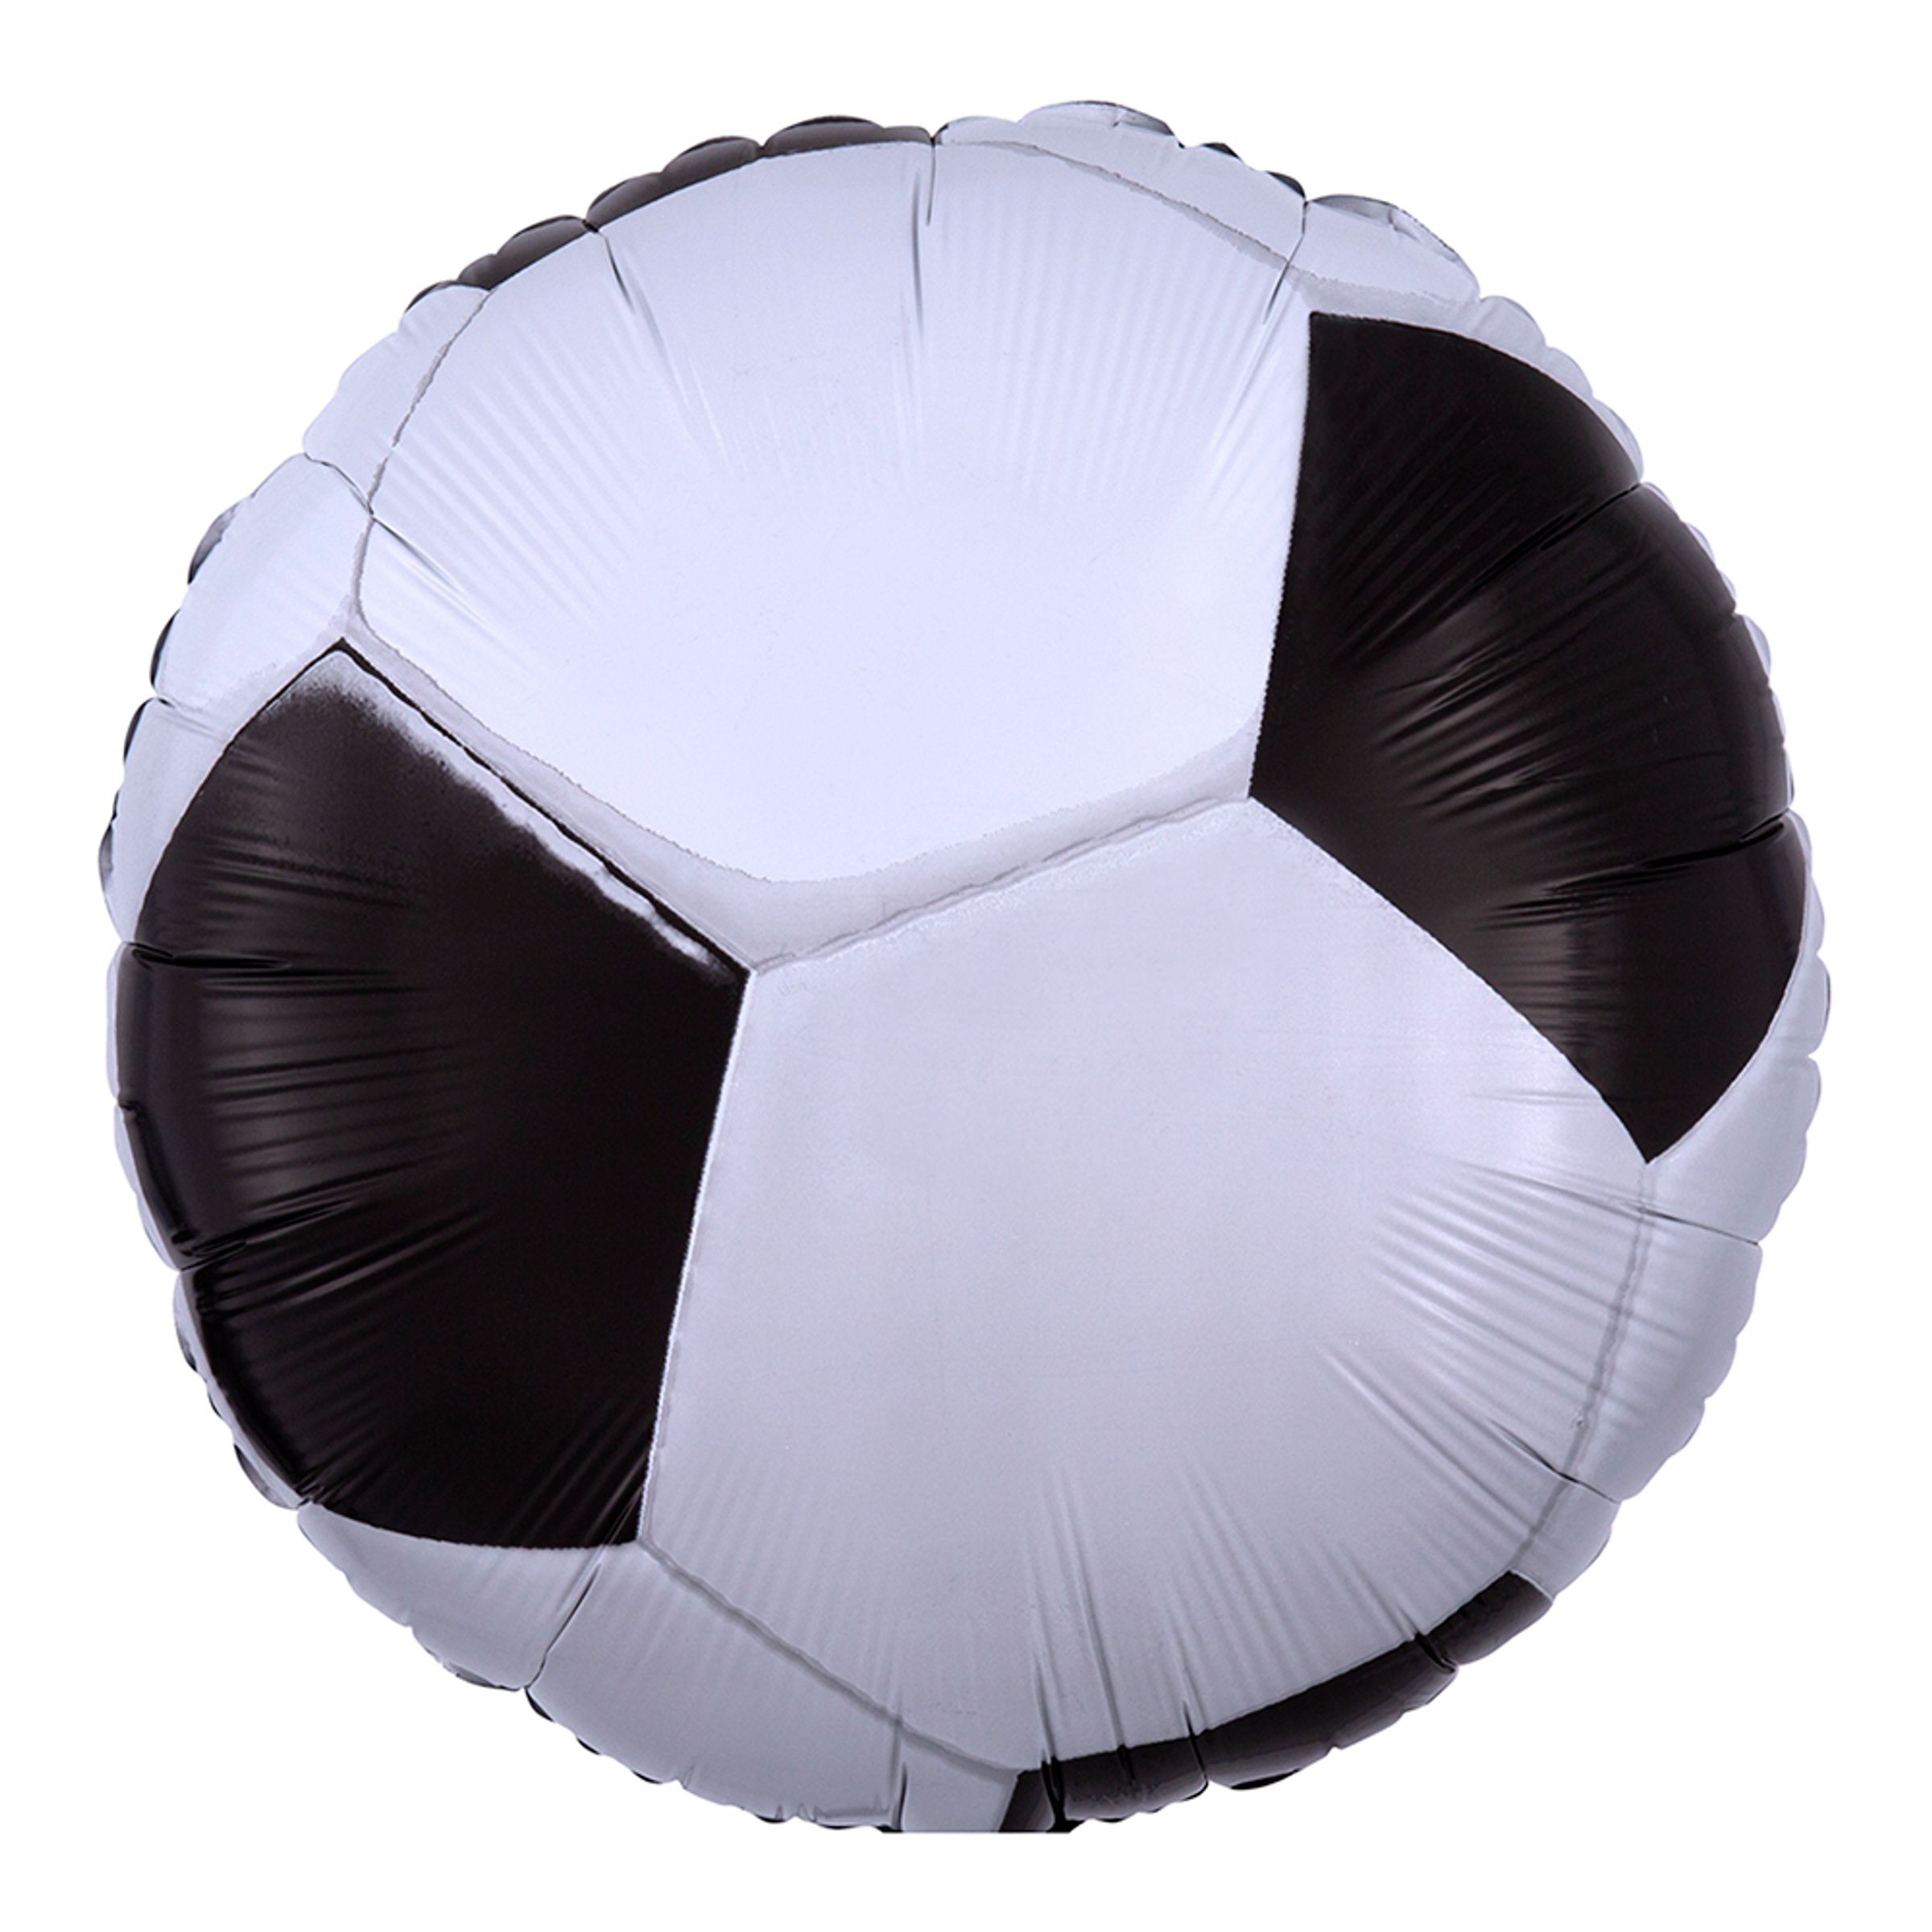 Folieballong Championship Fotboll